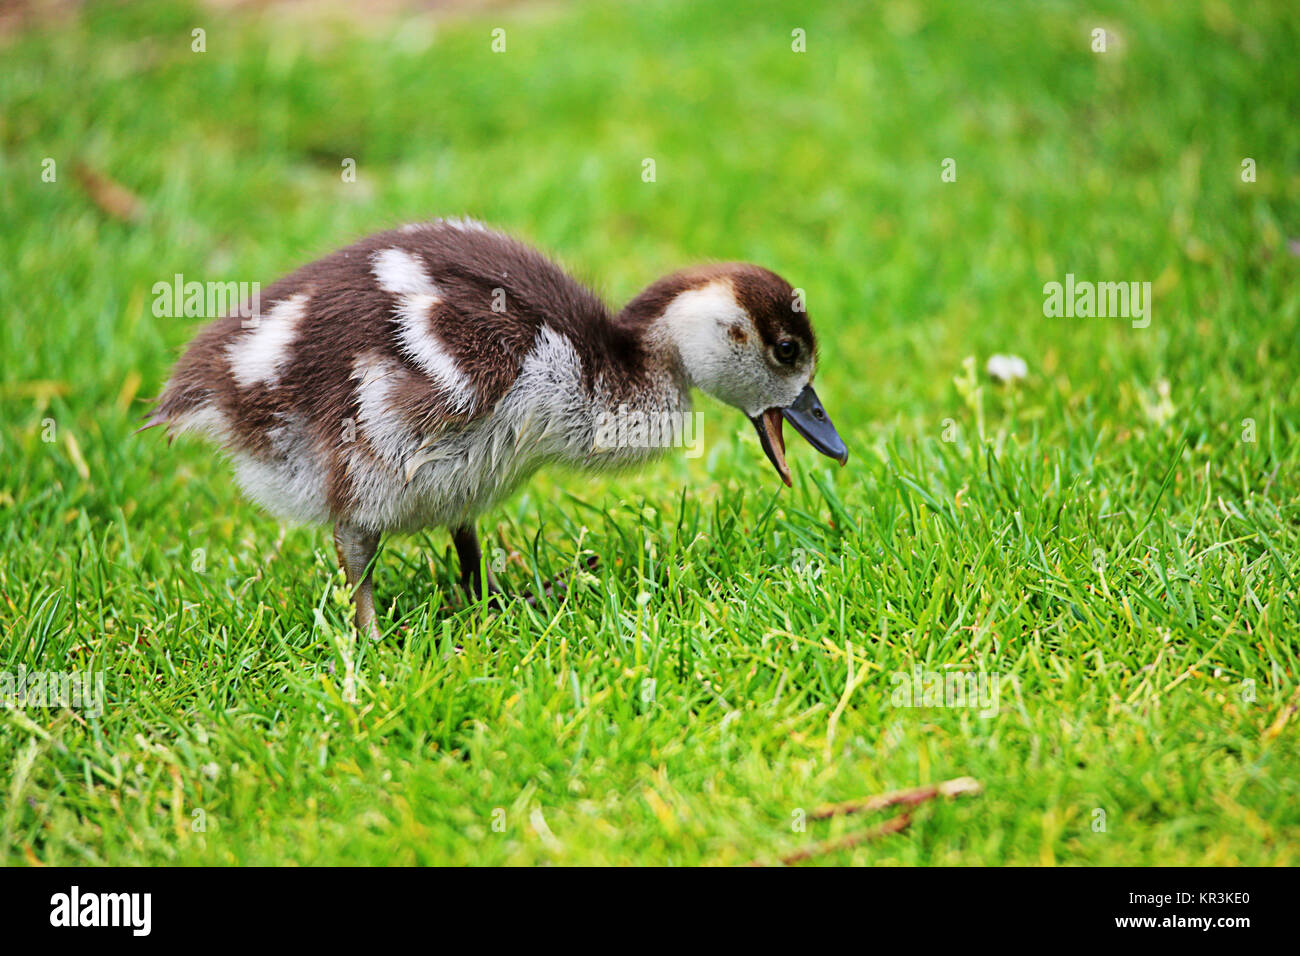 chick nilgans plucking grass Stock Photo